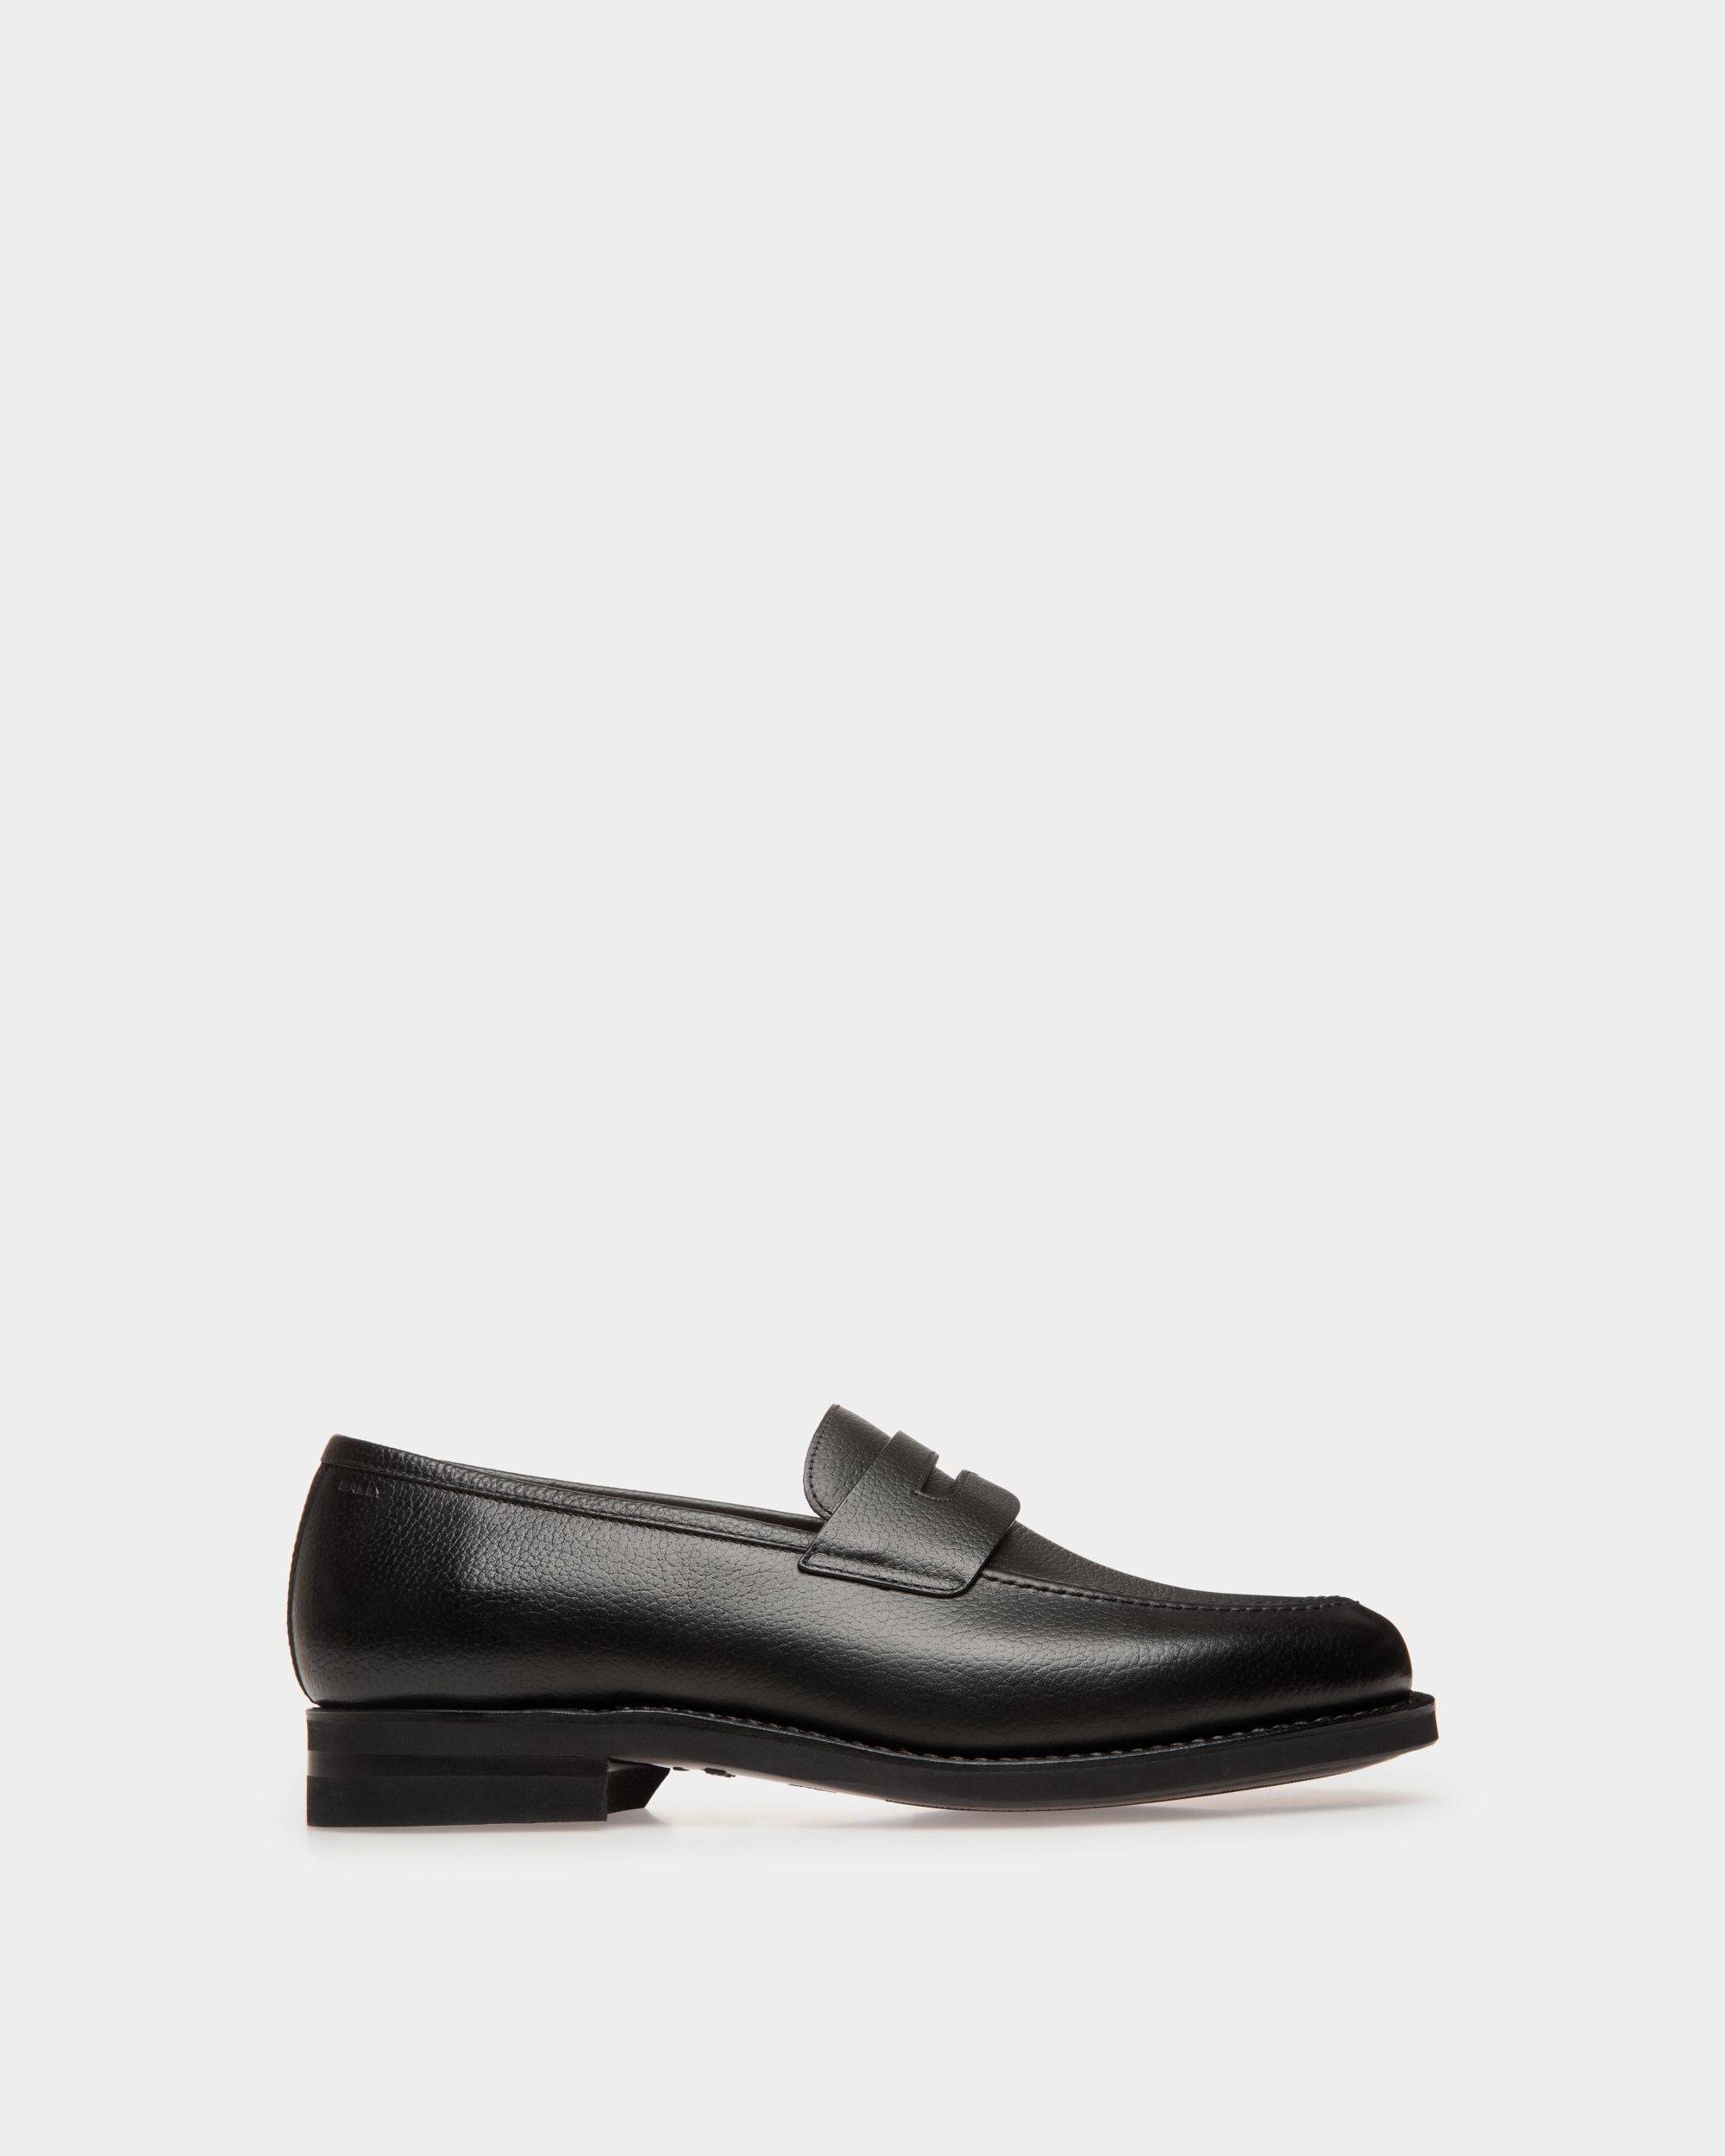 Schoenen | Men's Loafer in Black Embossed Leather | Bally | Still Life Side